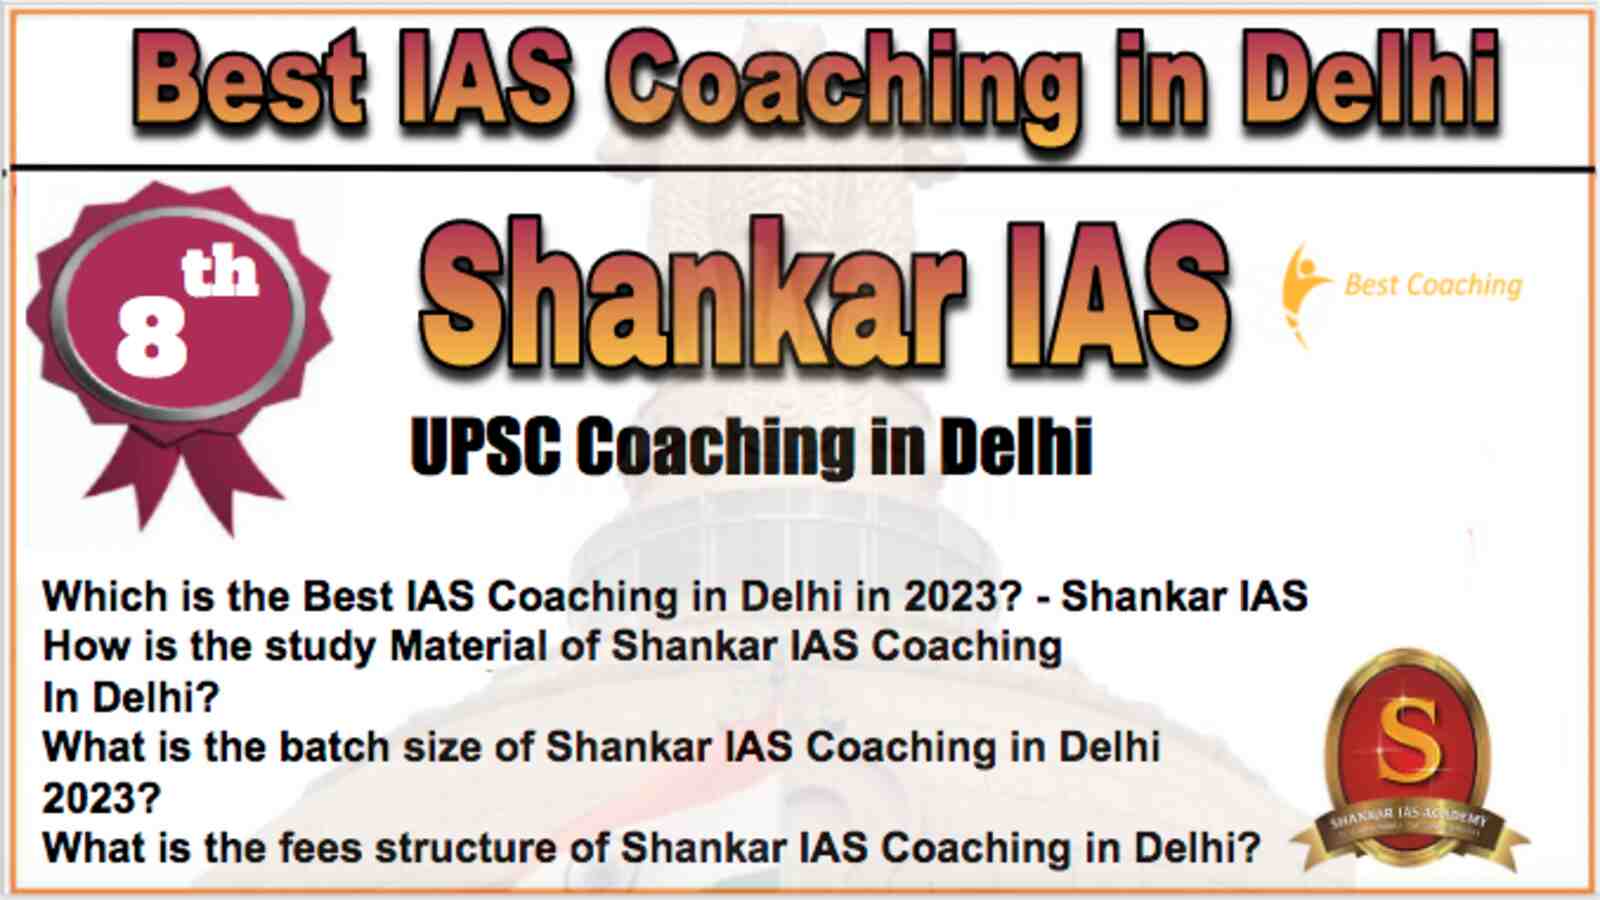 8th Best IAS Coaching in Delhi